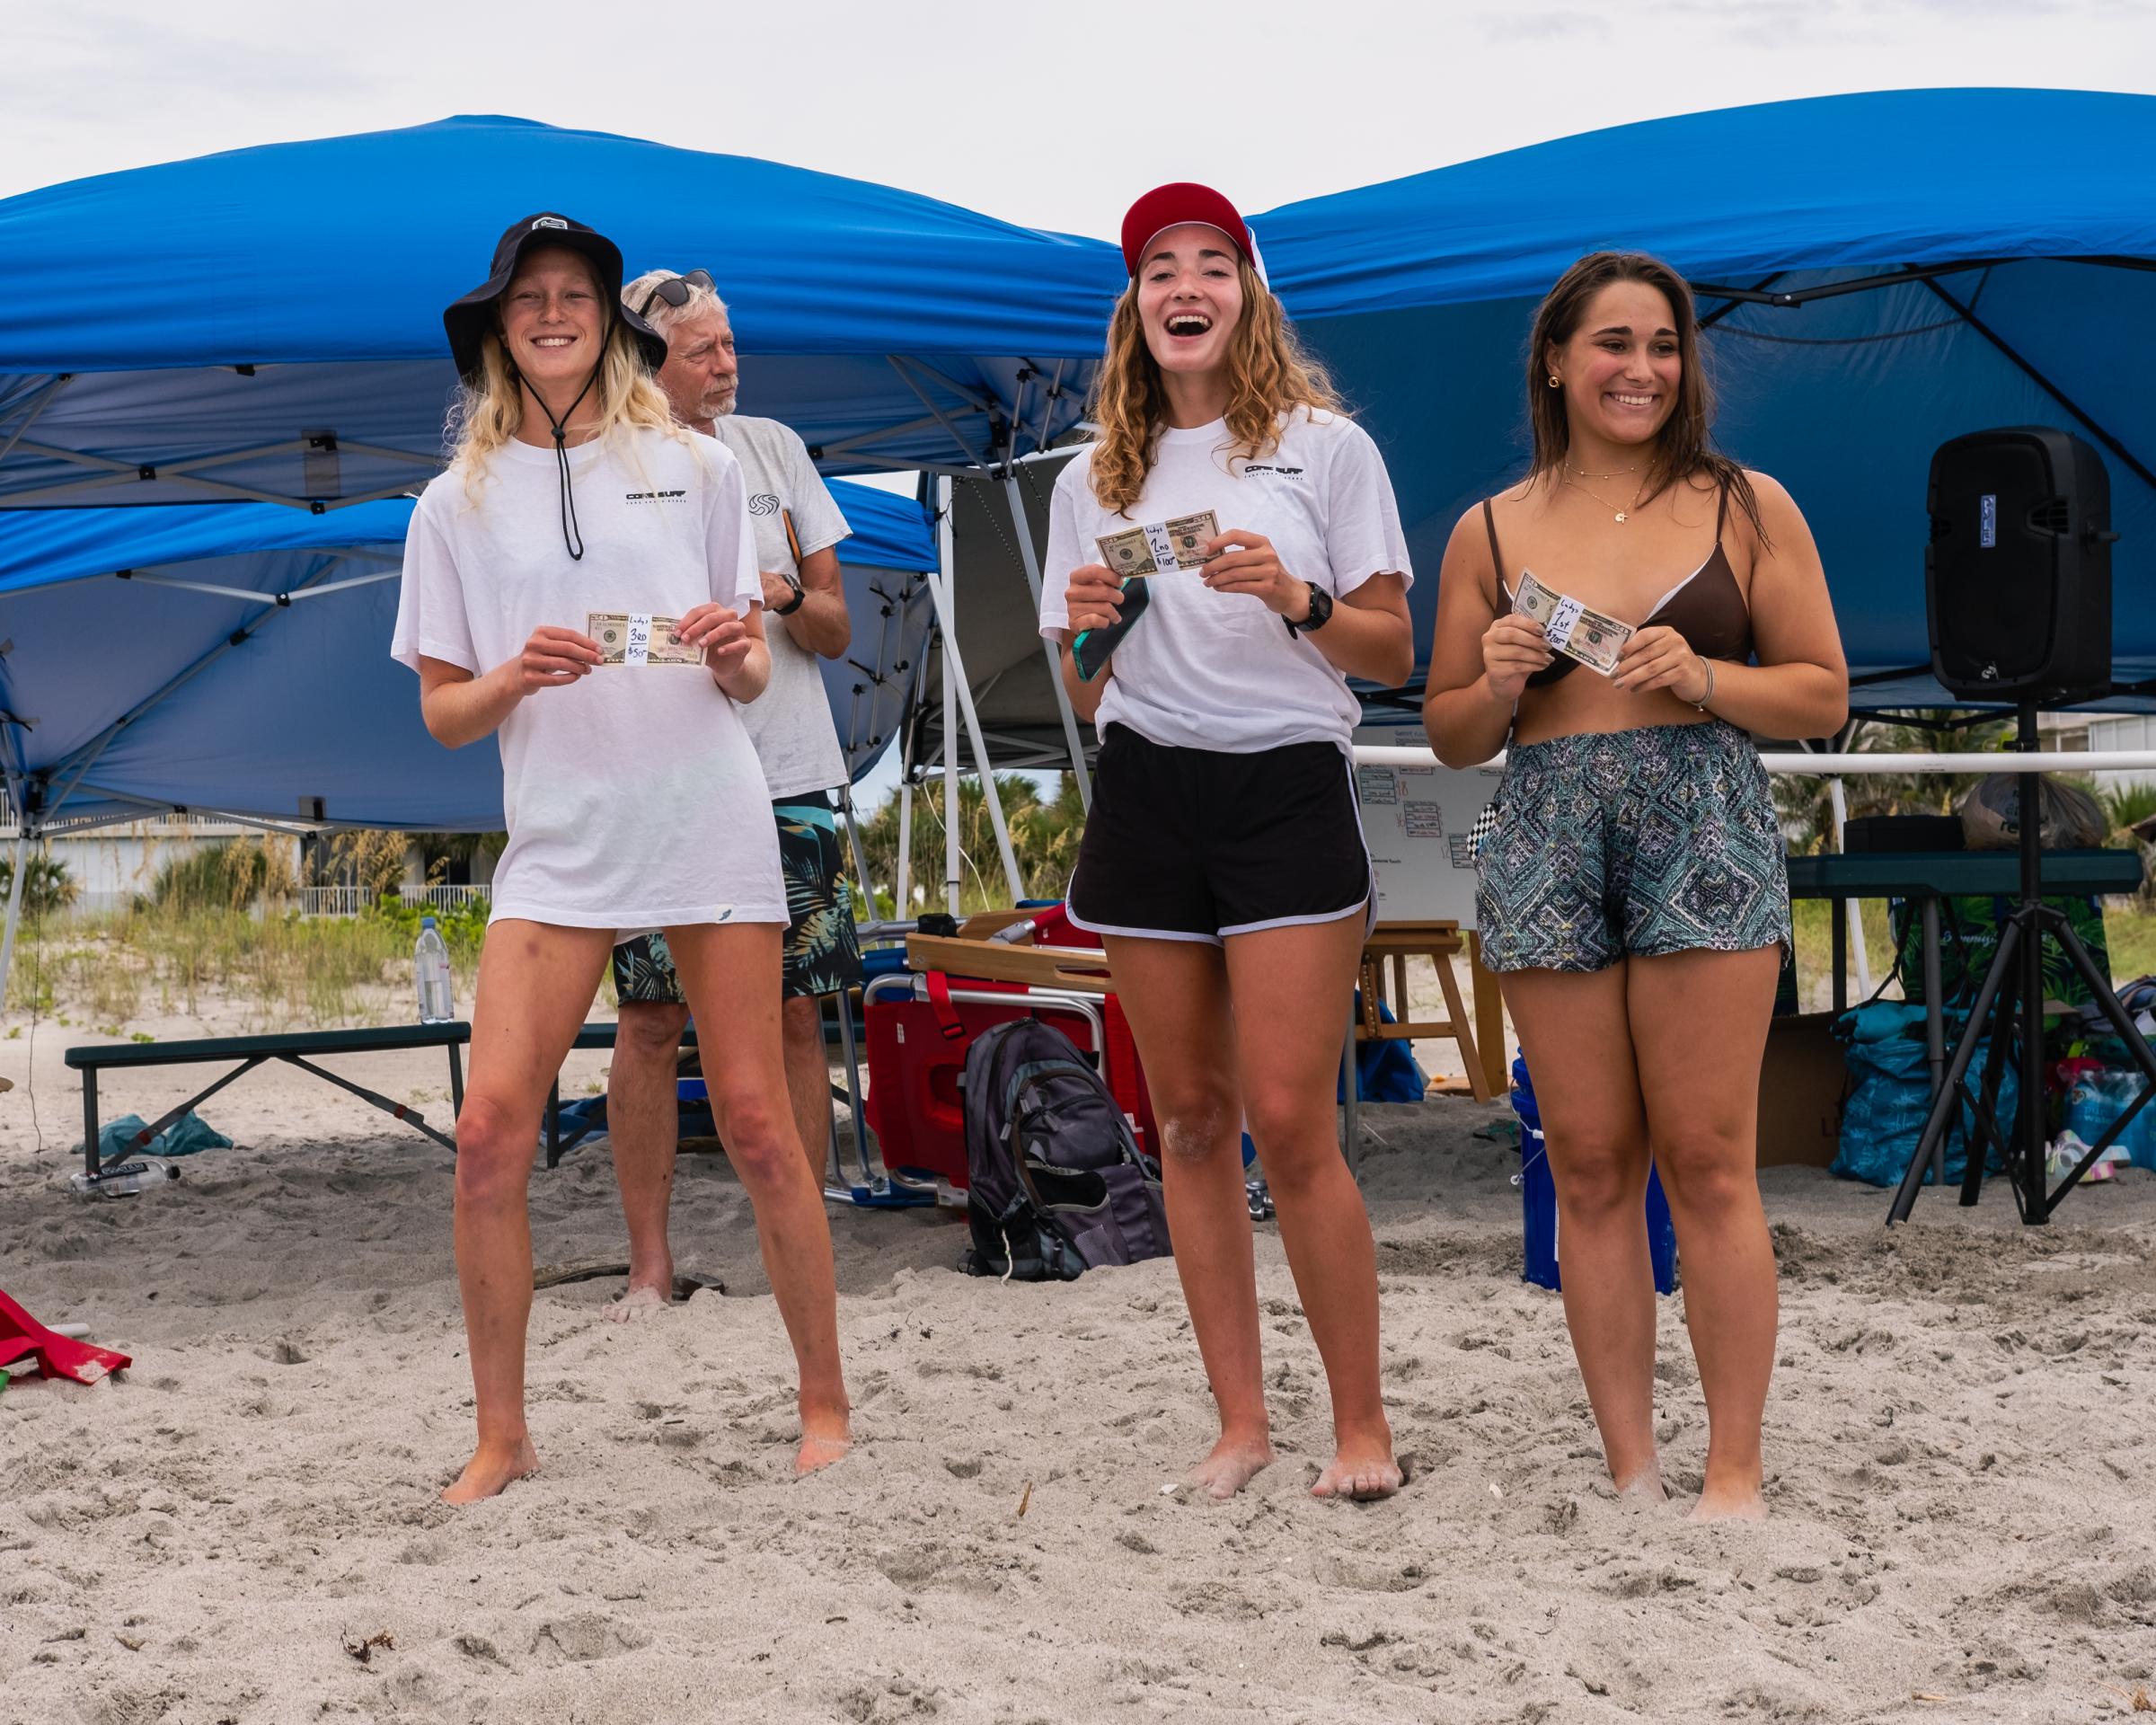 Cape Canaveral, FL. Hotdogzonastix Surf Contest July 2021 -  (L-R) Sarah Stotz 3rd place, Kaylin Weinrich 2nd place,...